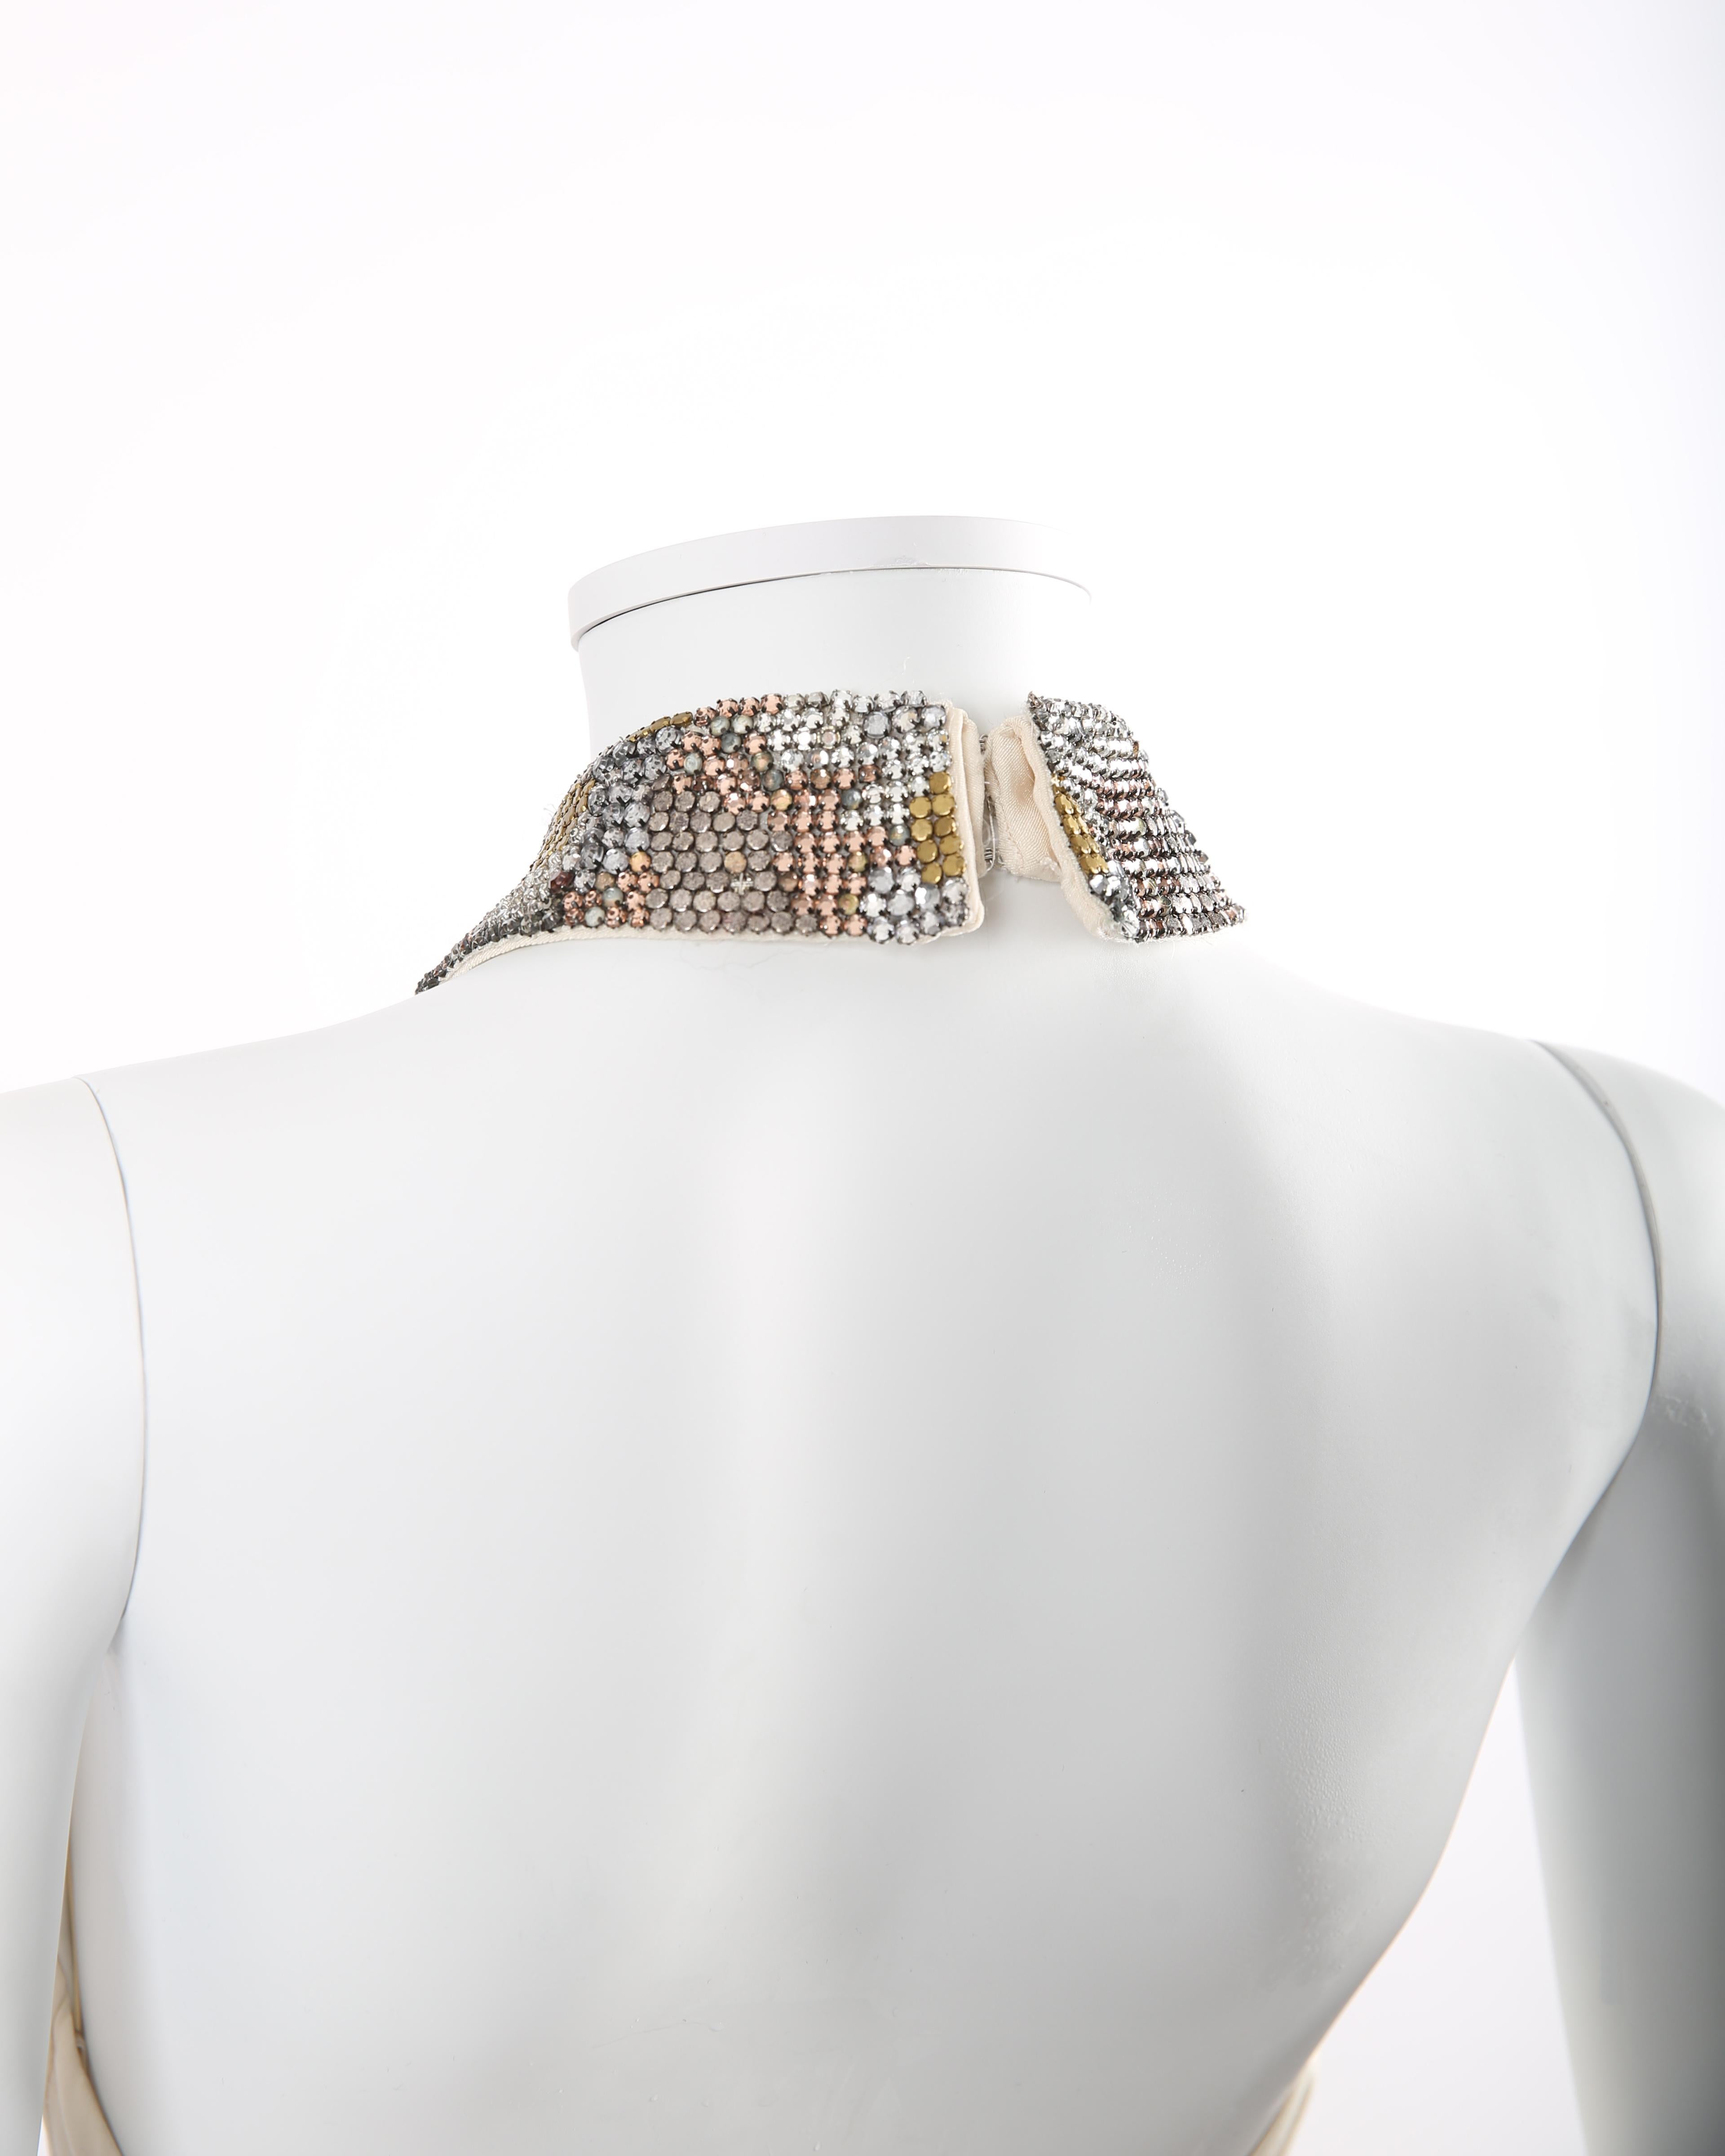 Jenny Packham ivory cream crystal jewel collar backless wedding dress jumpsuit For Sale 1